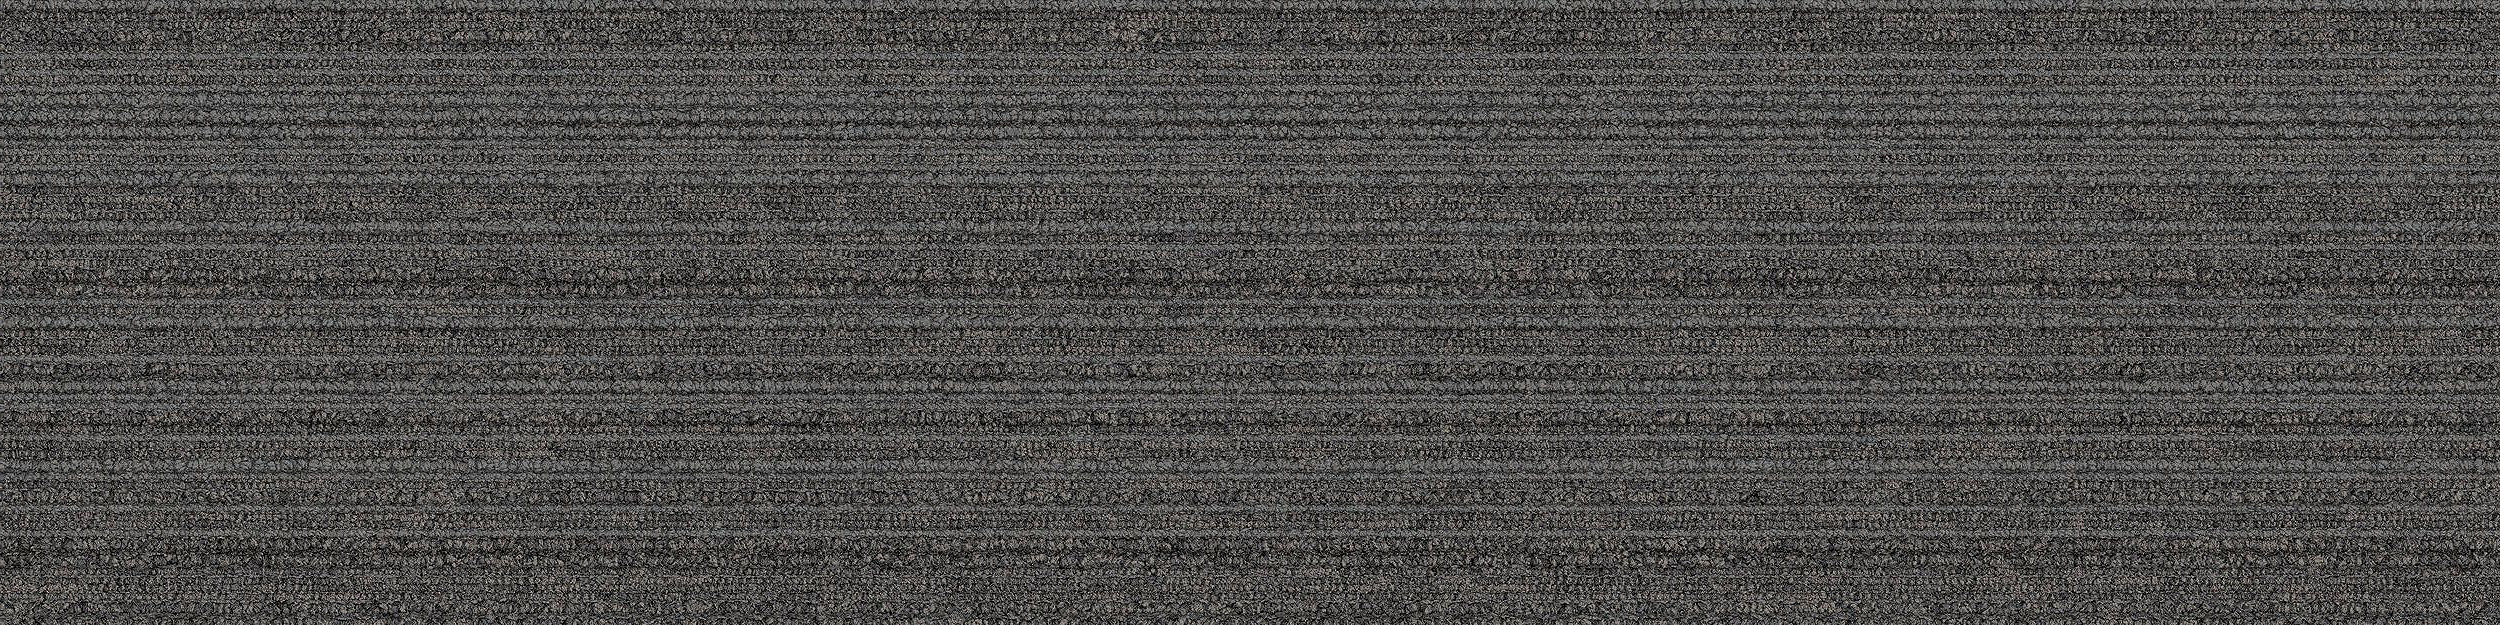 SL910 Carpet Tile In Graphite imagen número 7